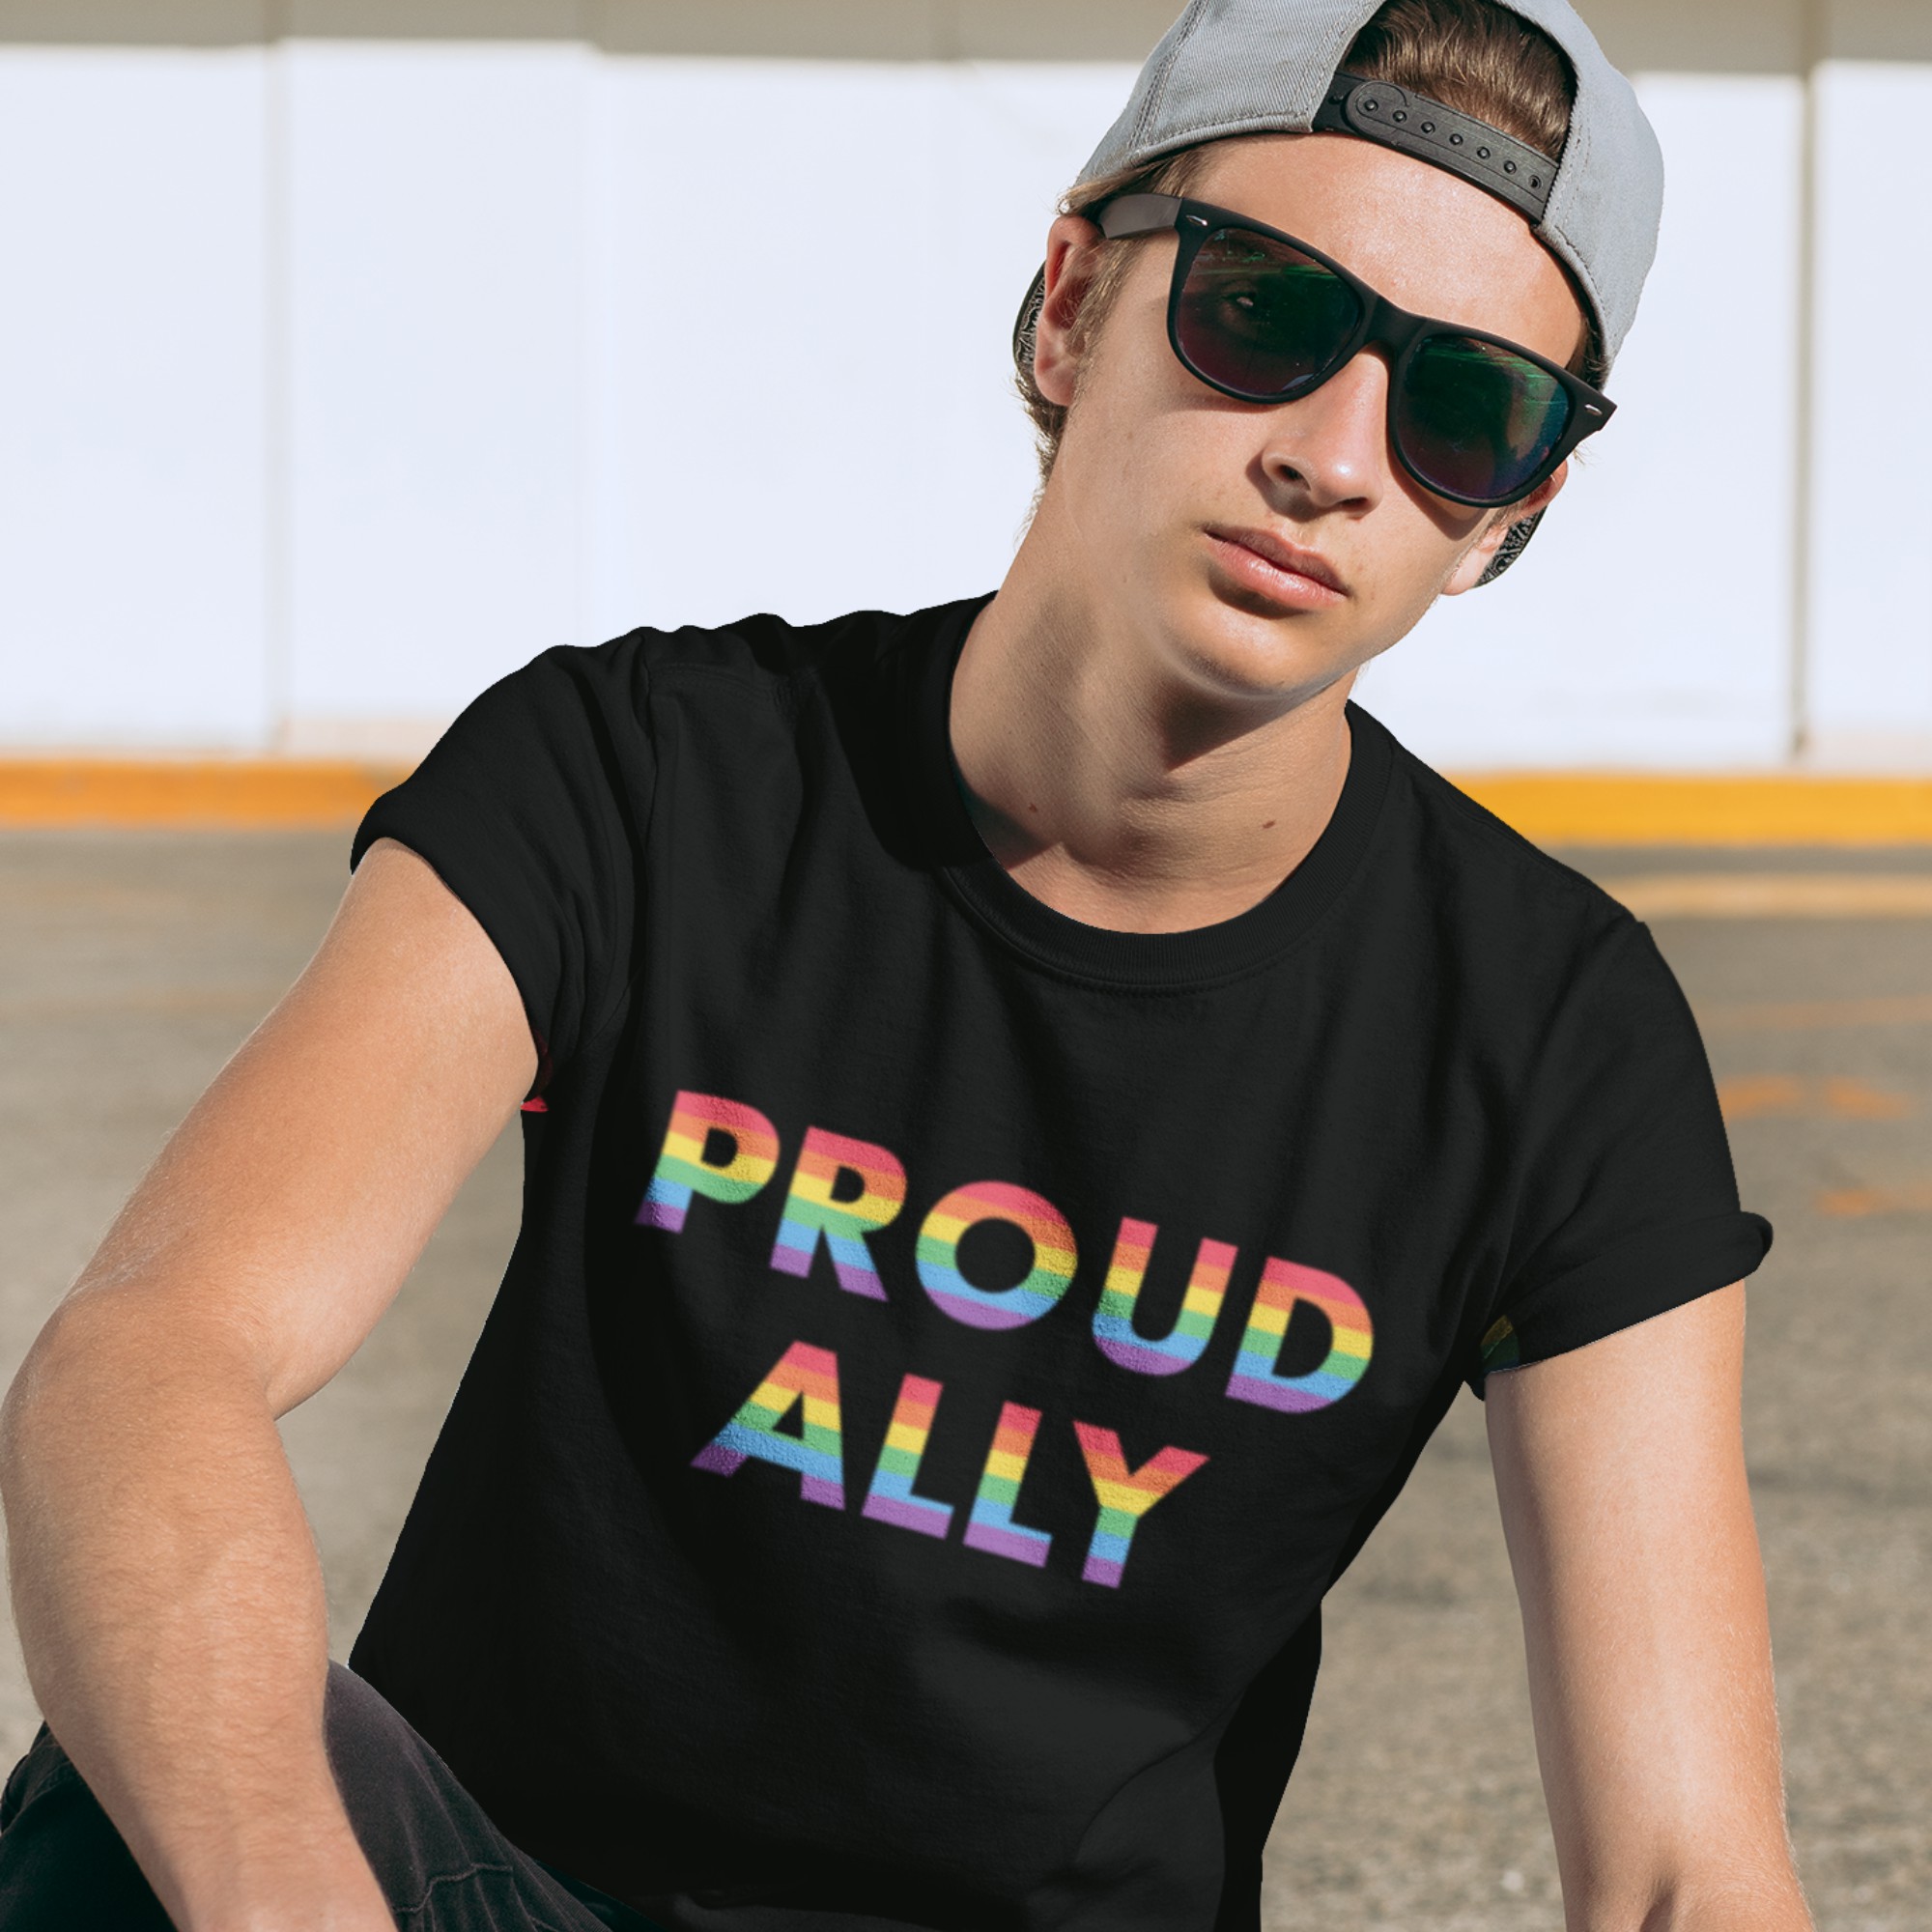 Proud Ally Tshirt